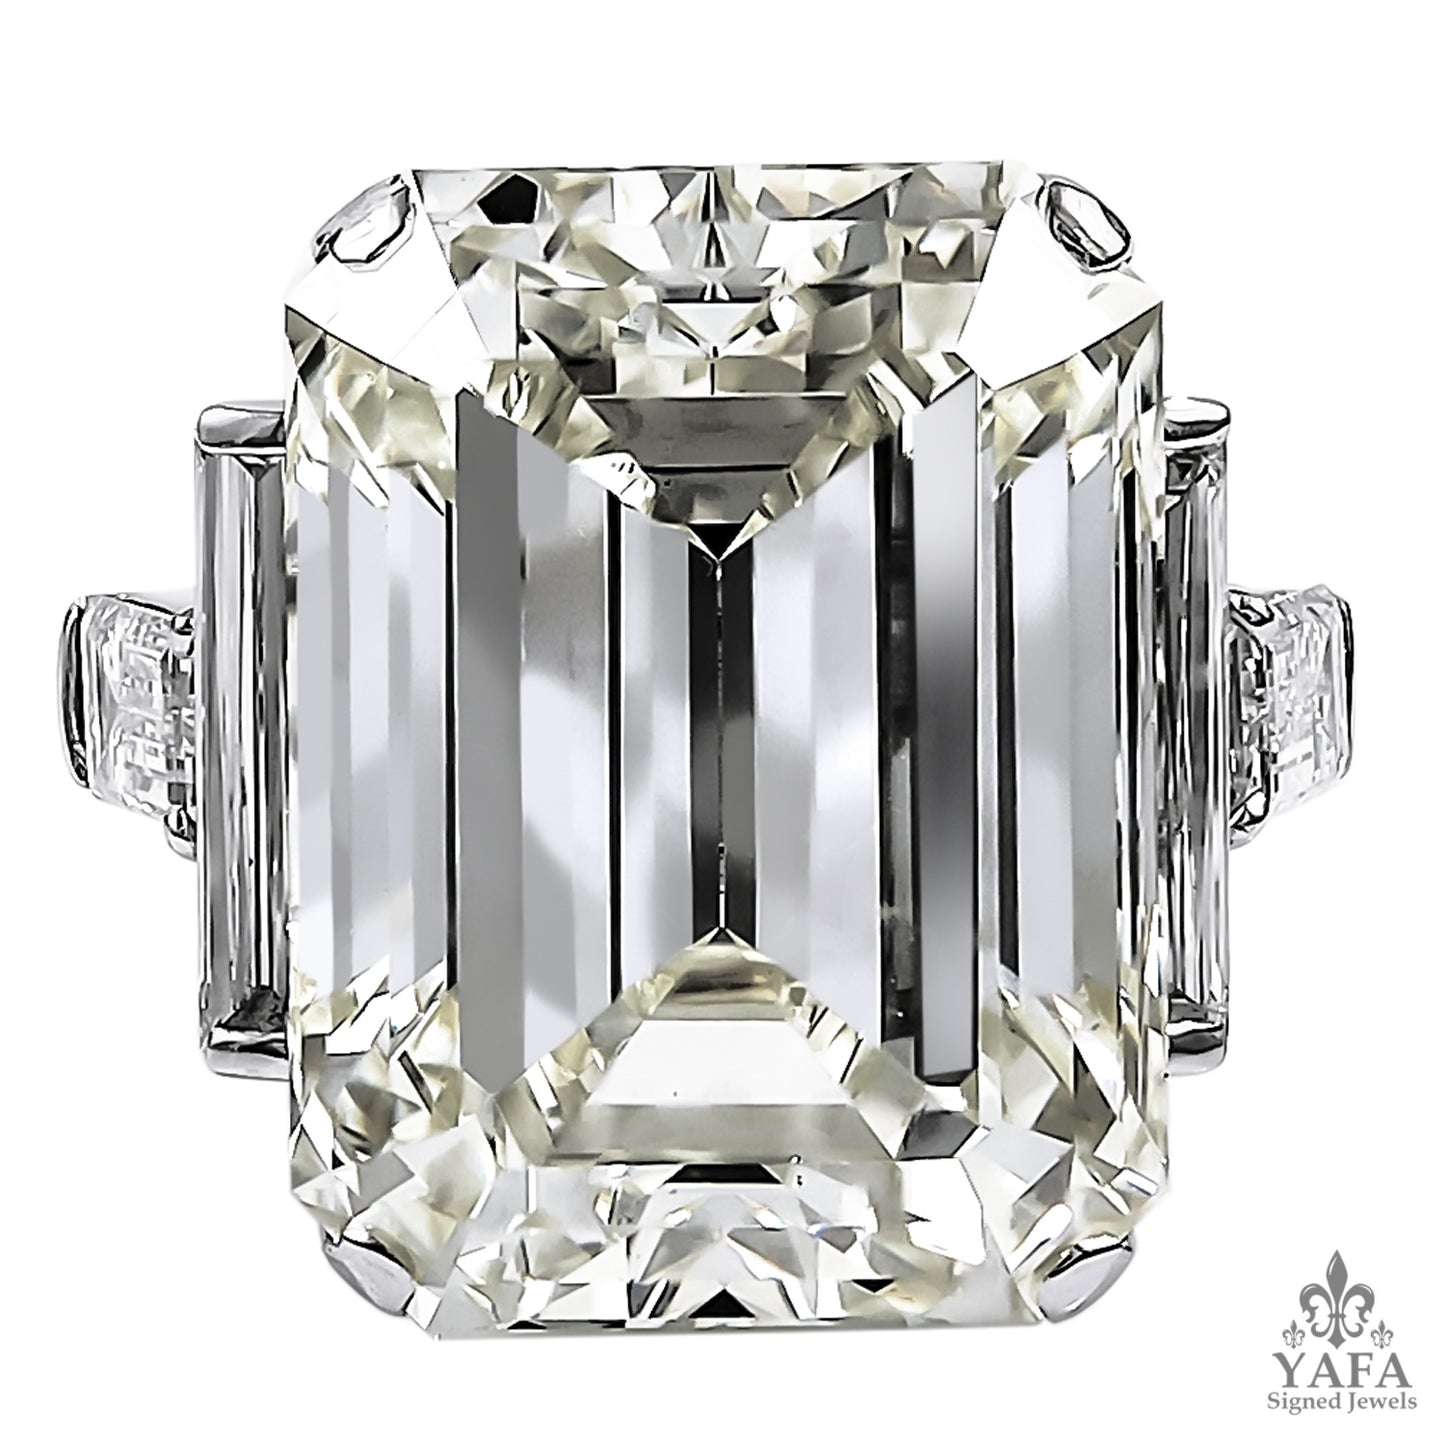 DAVID WEBB Emerald-Cut Diamond Engagement Ring - 52.55 cts.